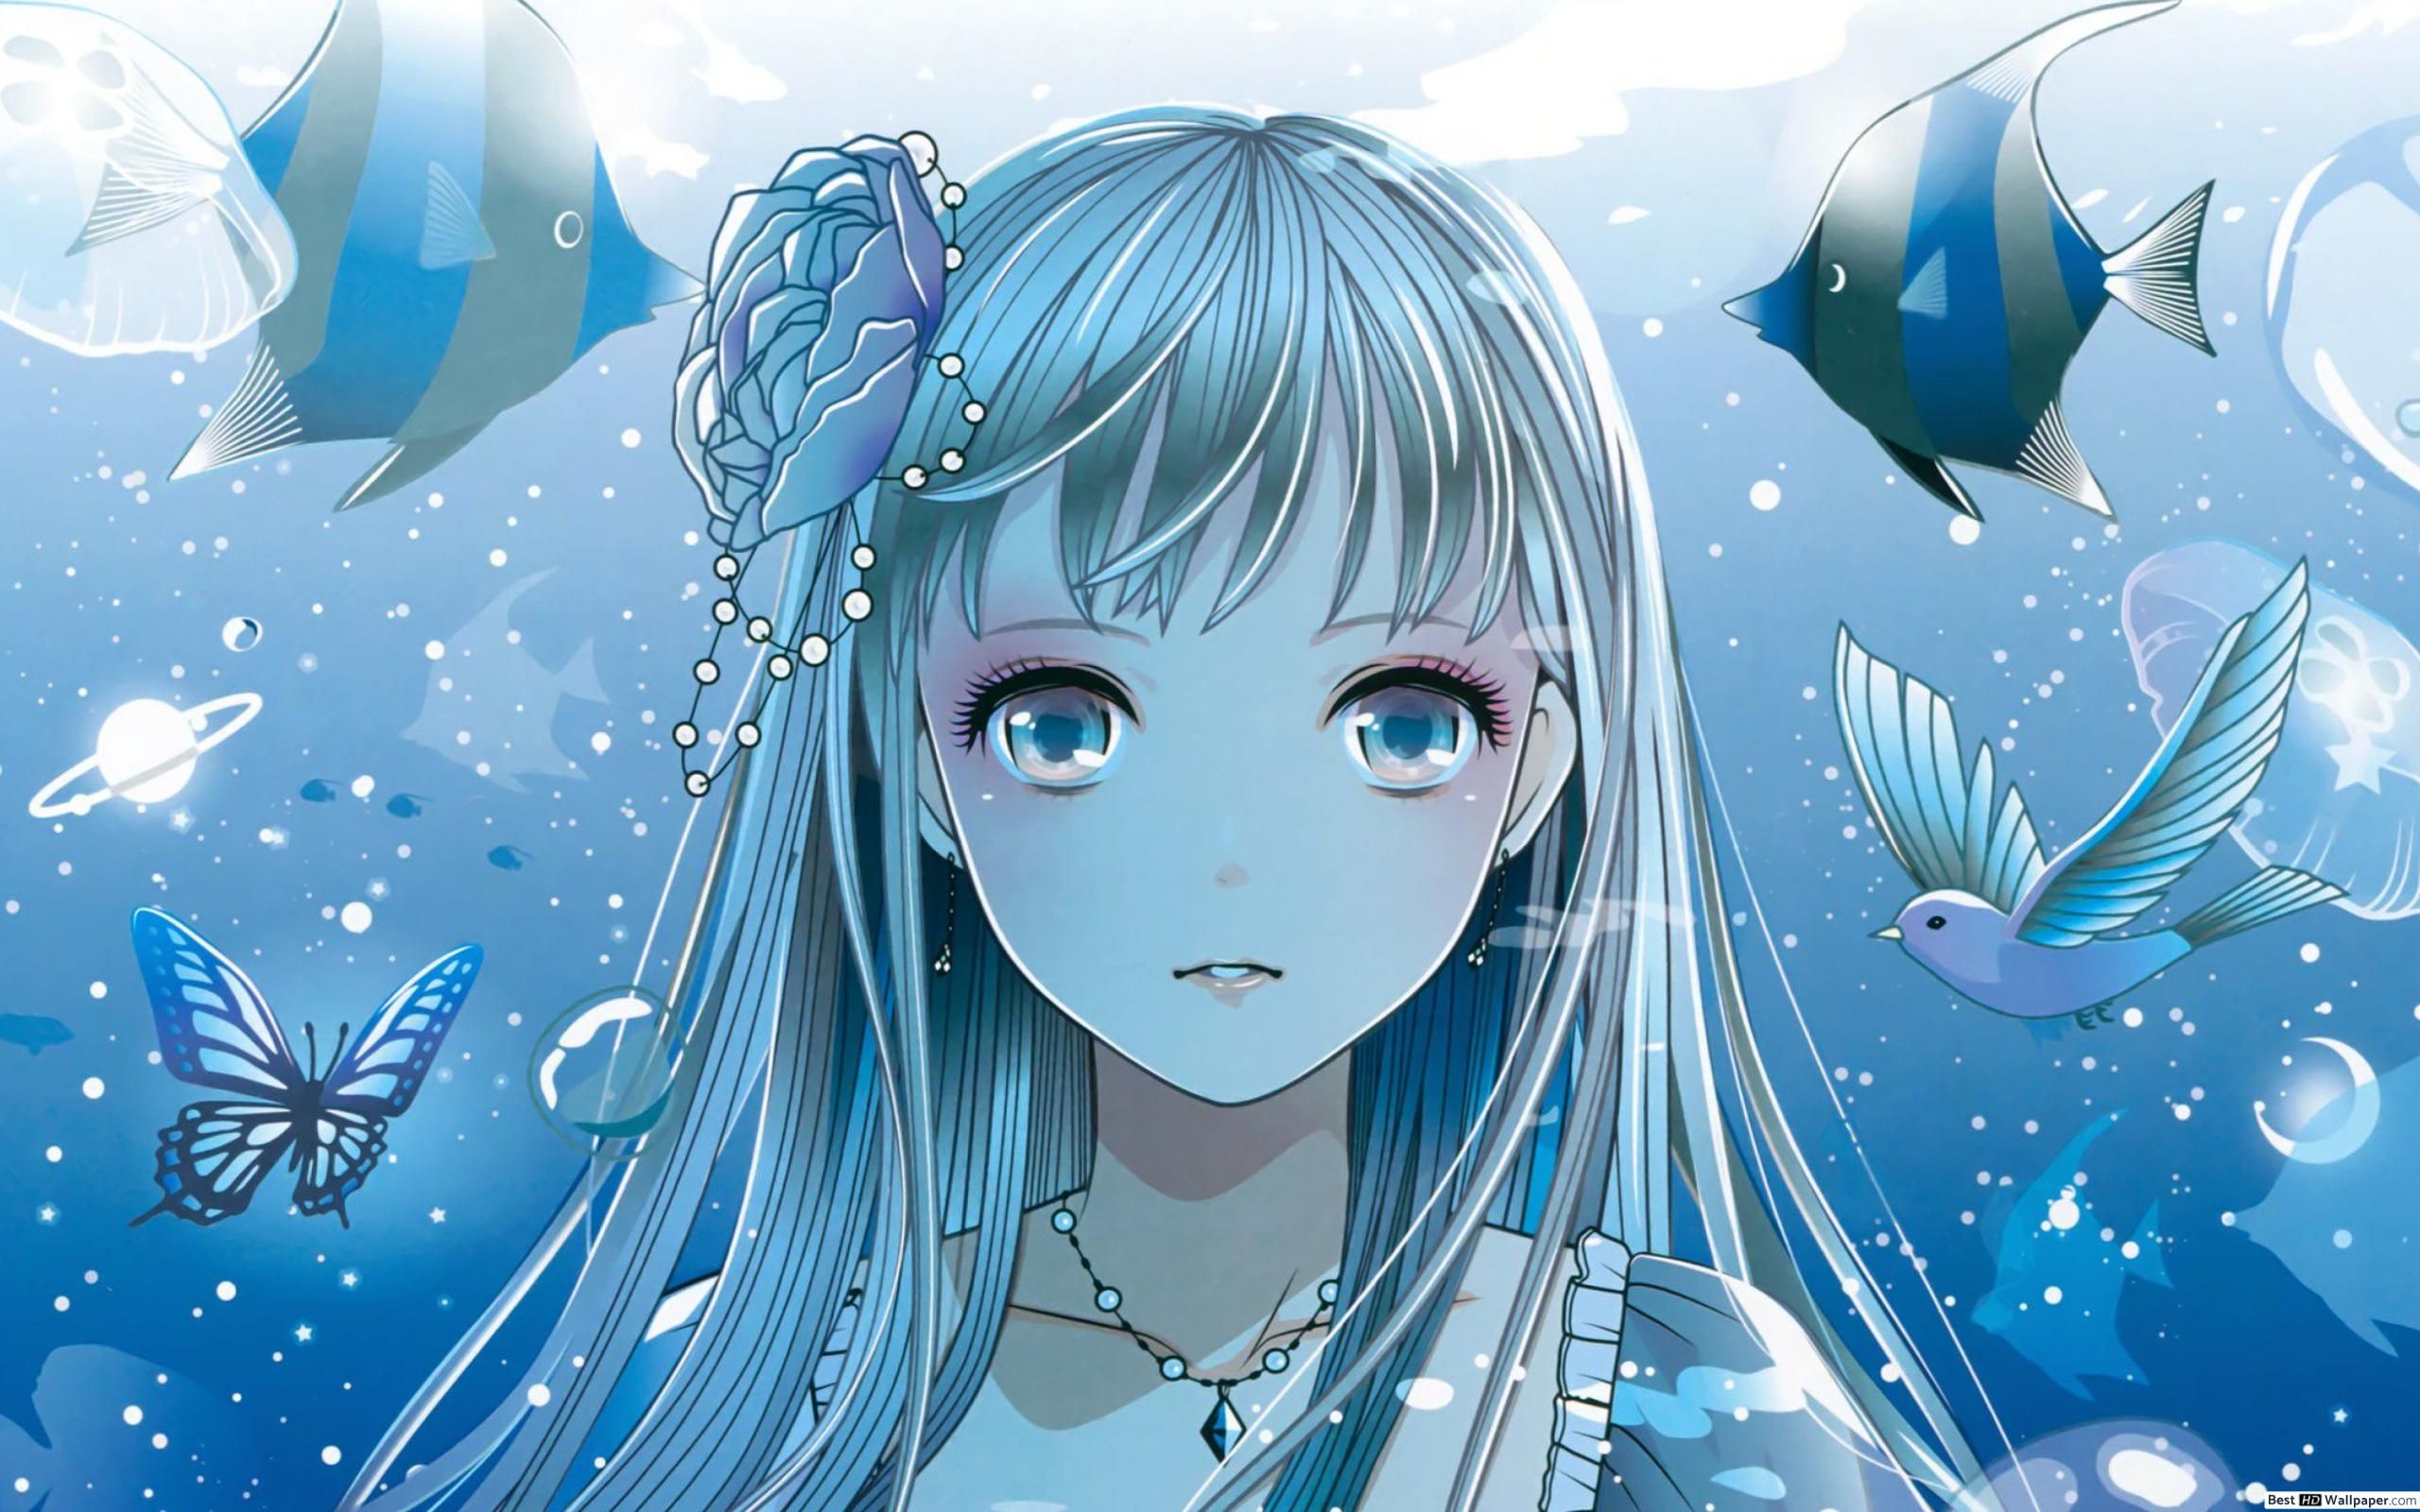 AnimeWallpapers (Anime___Wallpaper) - Profile